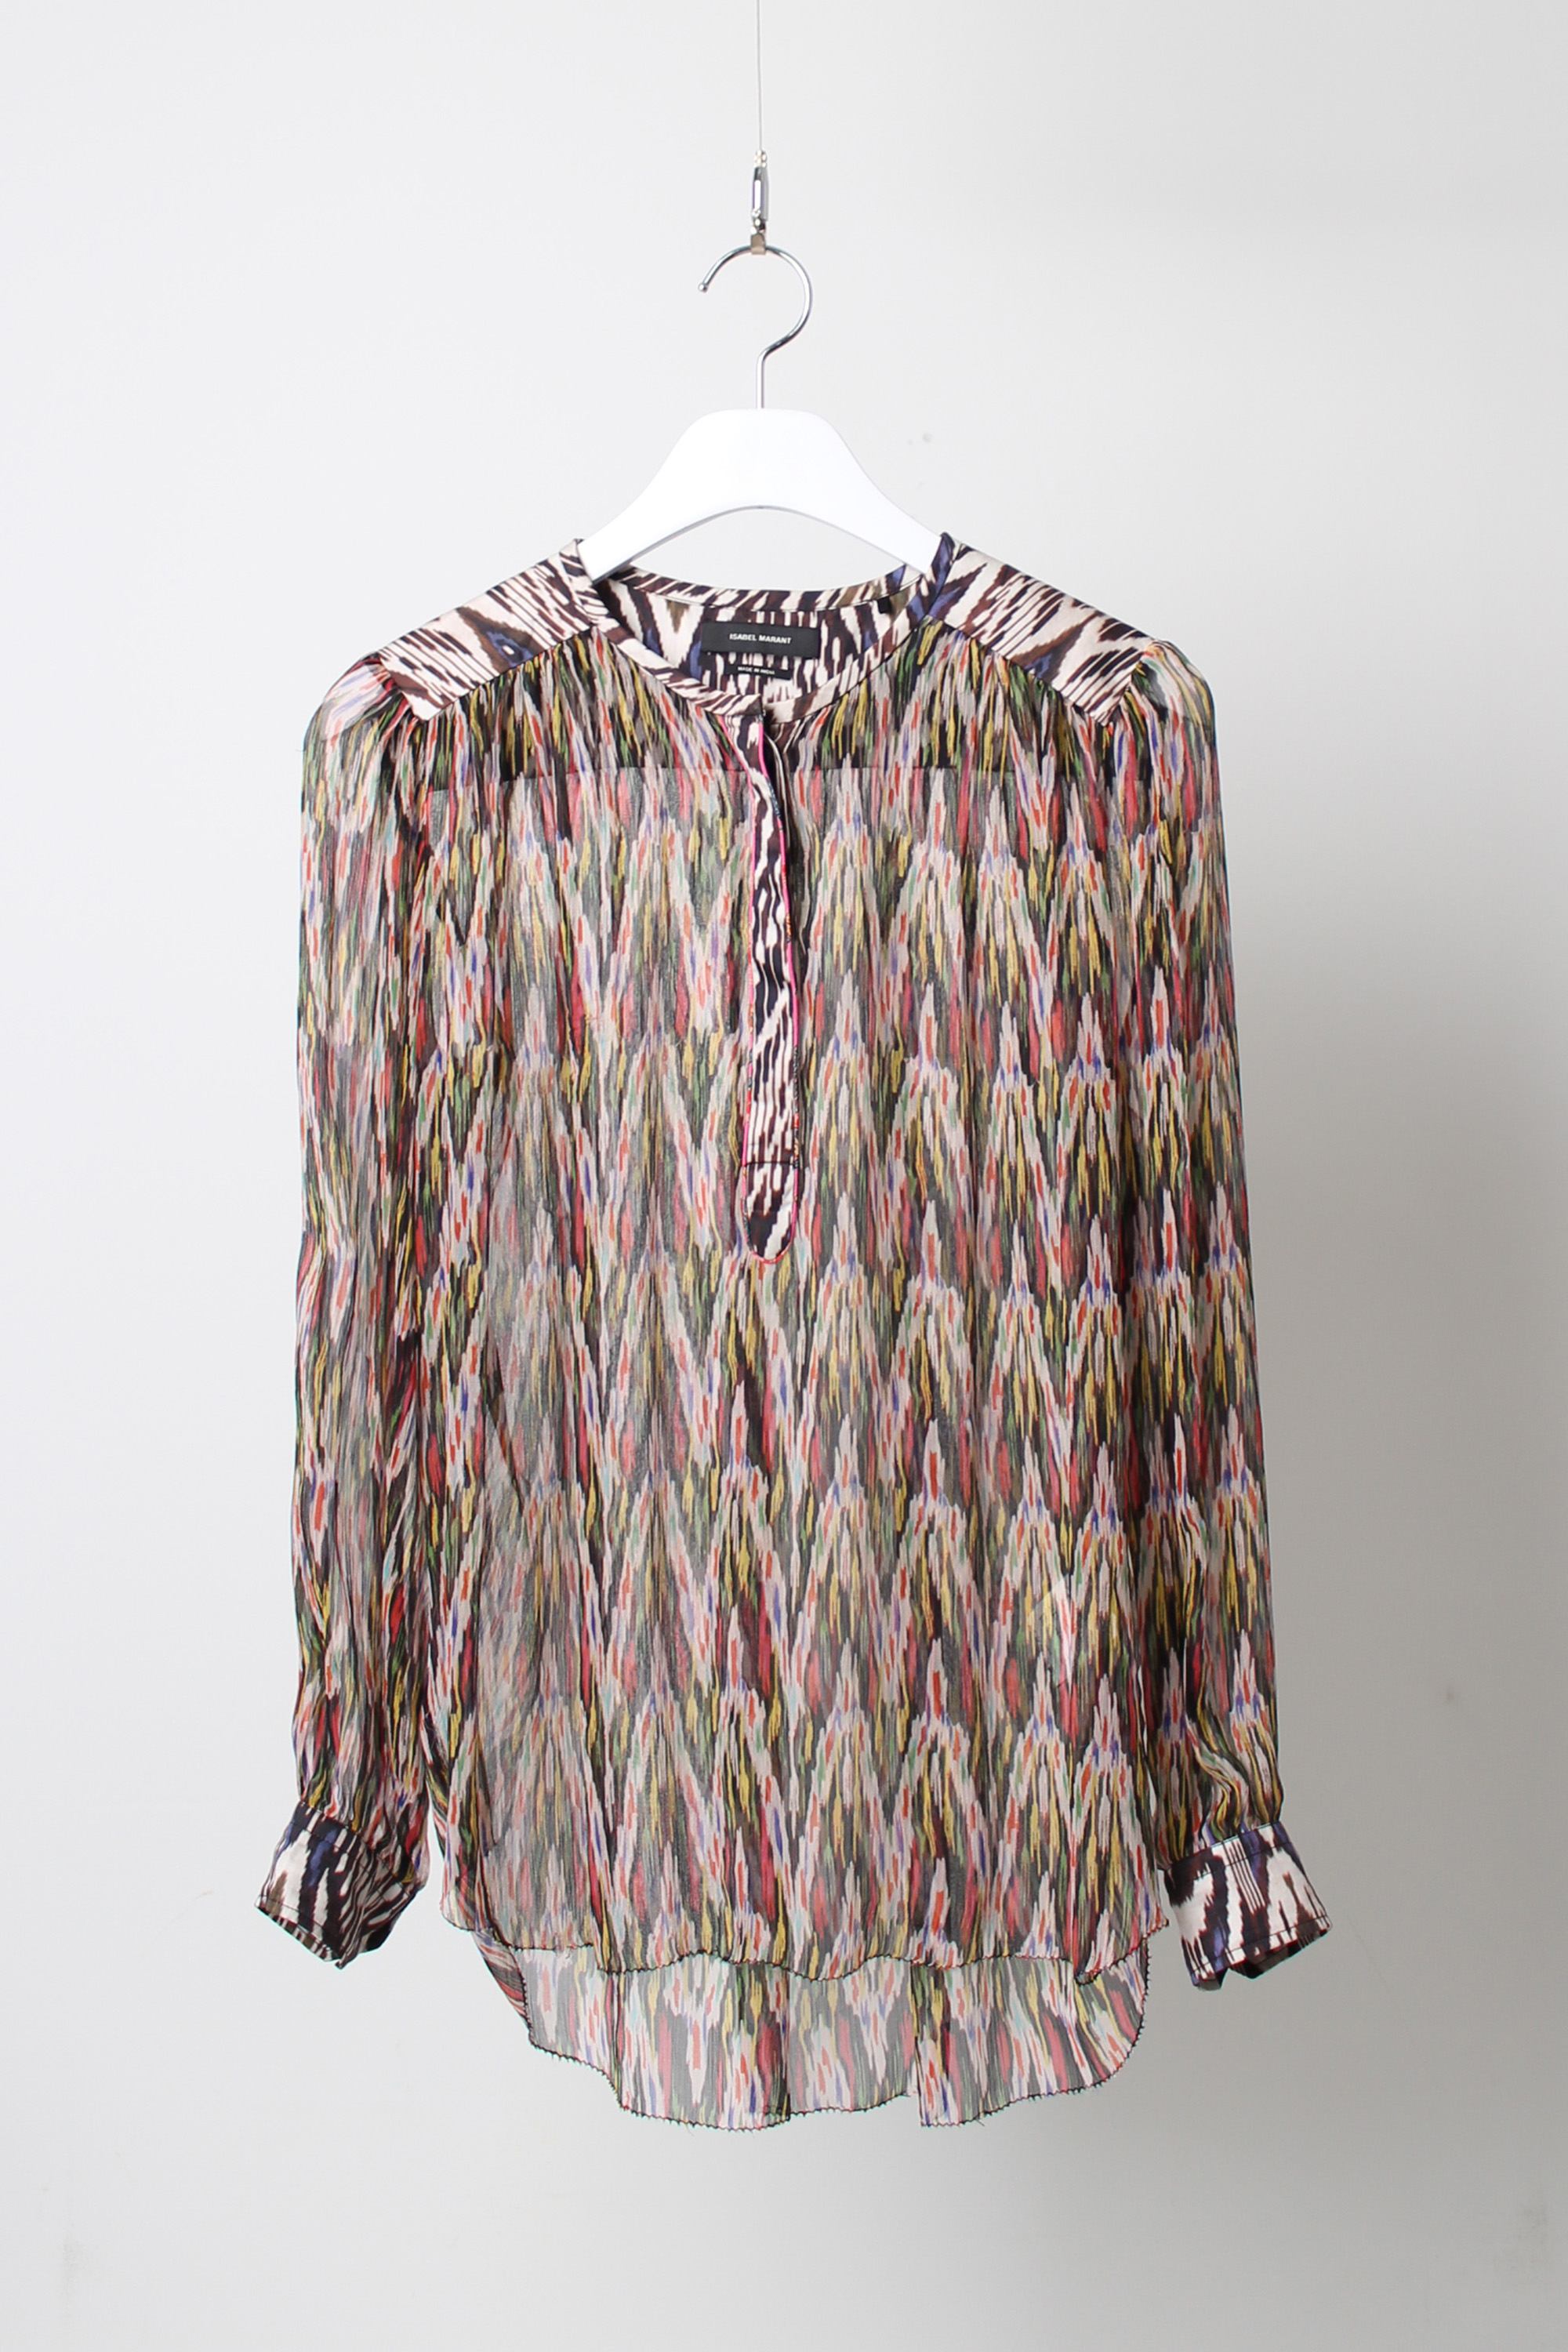 Isabel Maran silk blouse